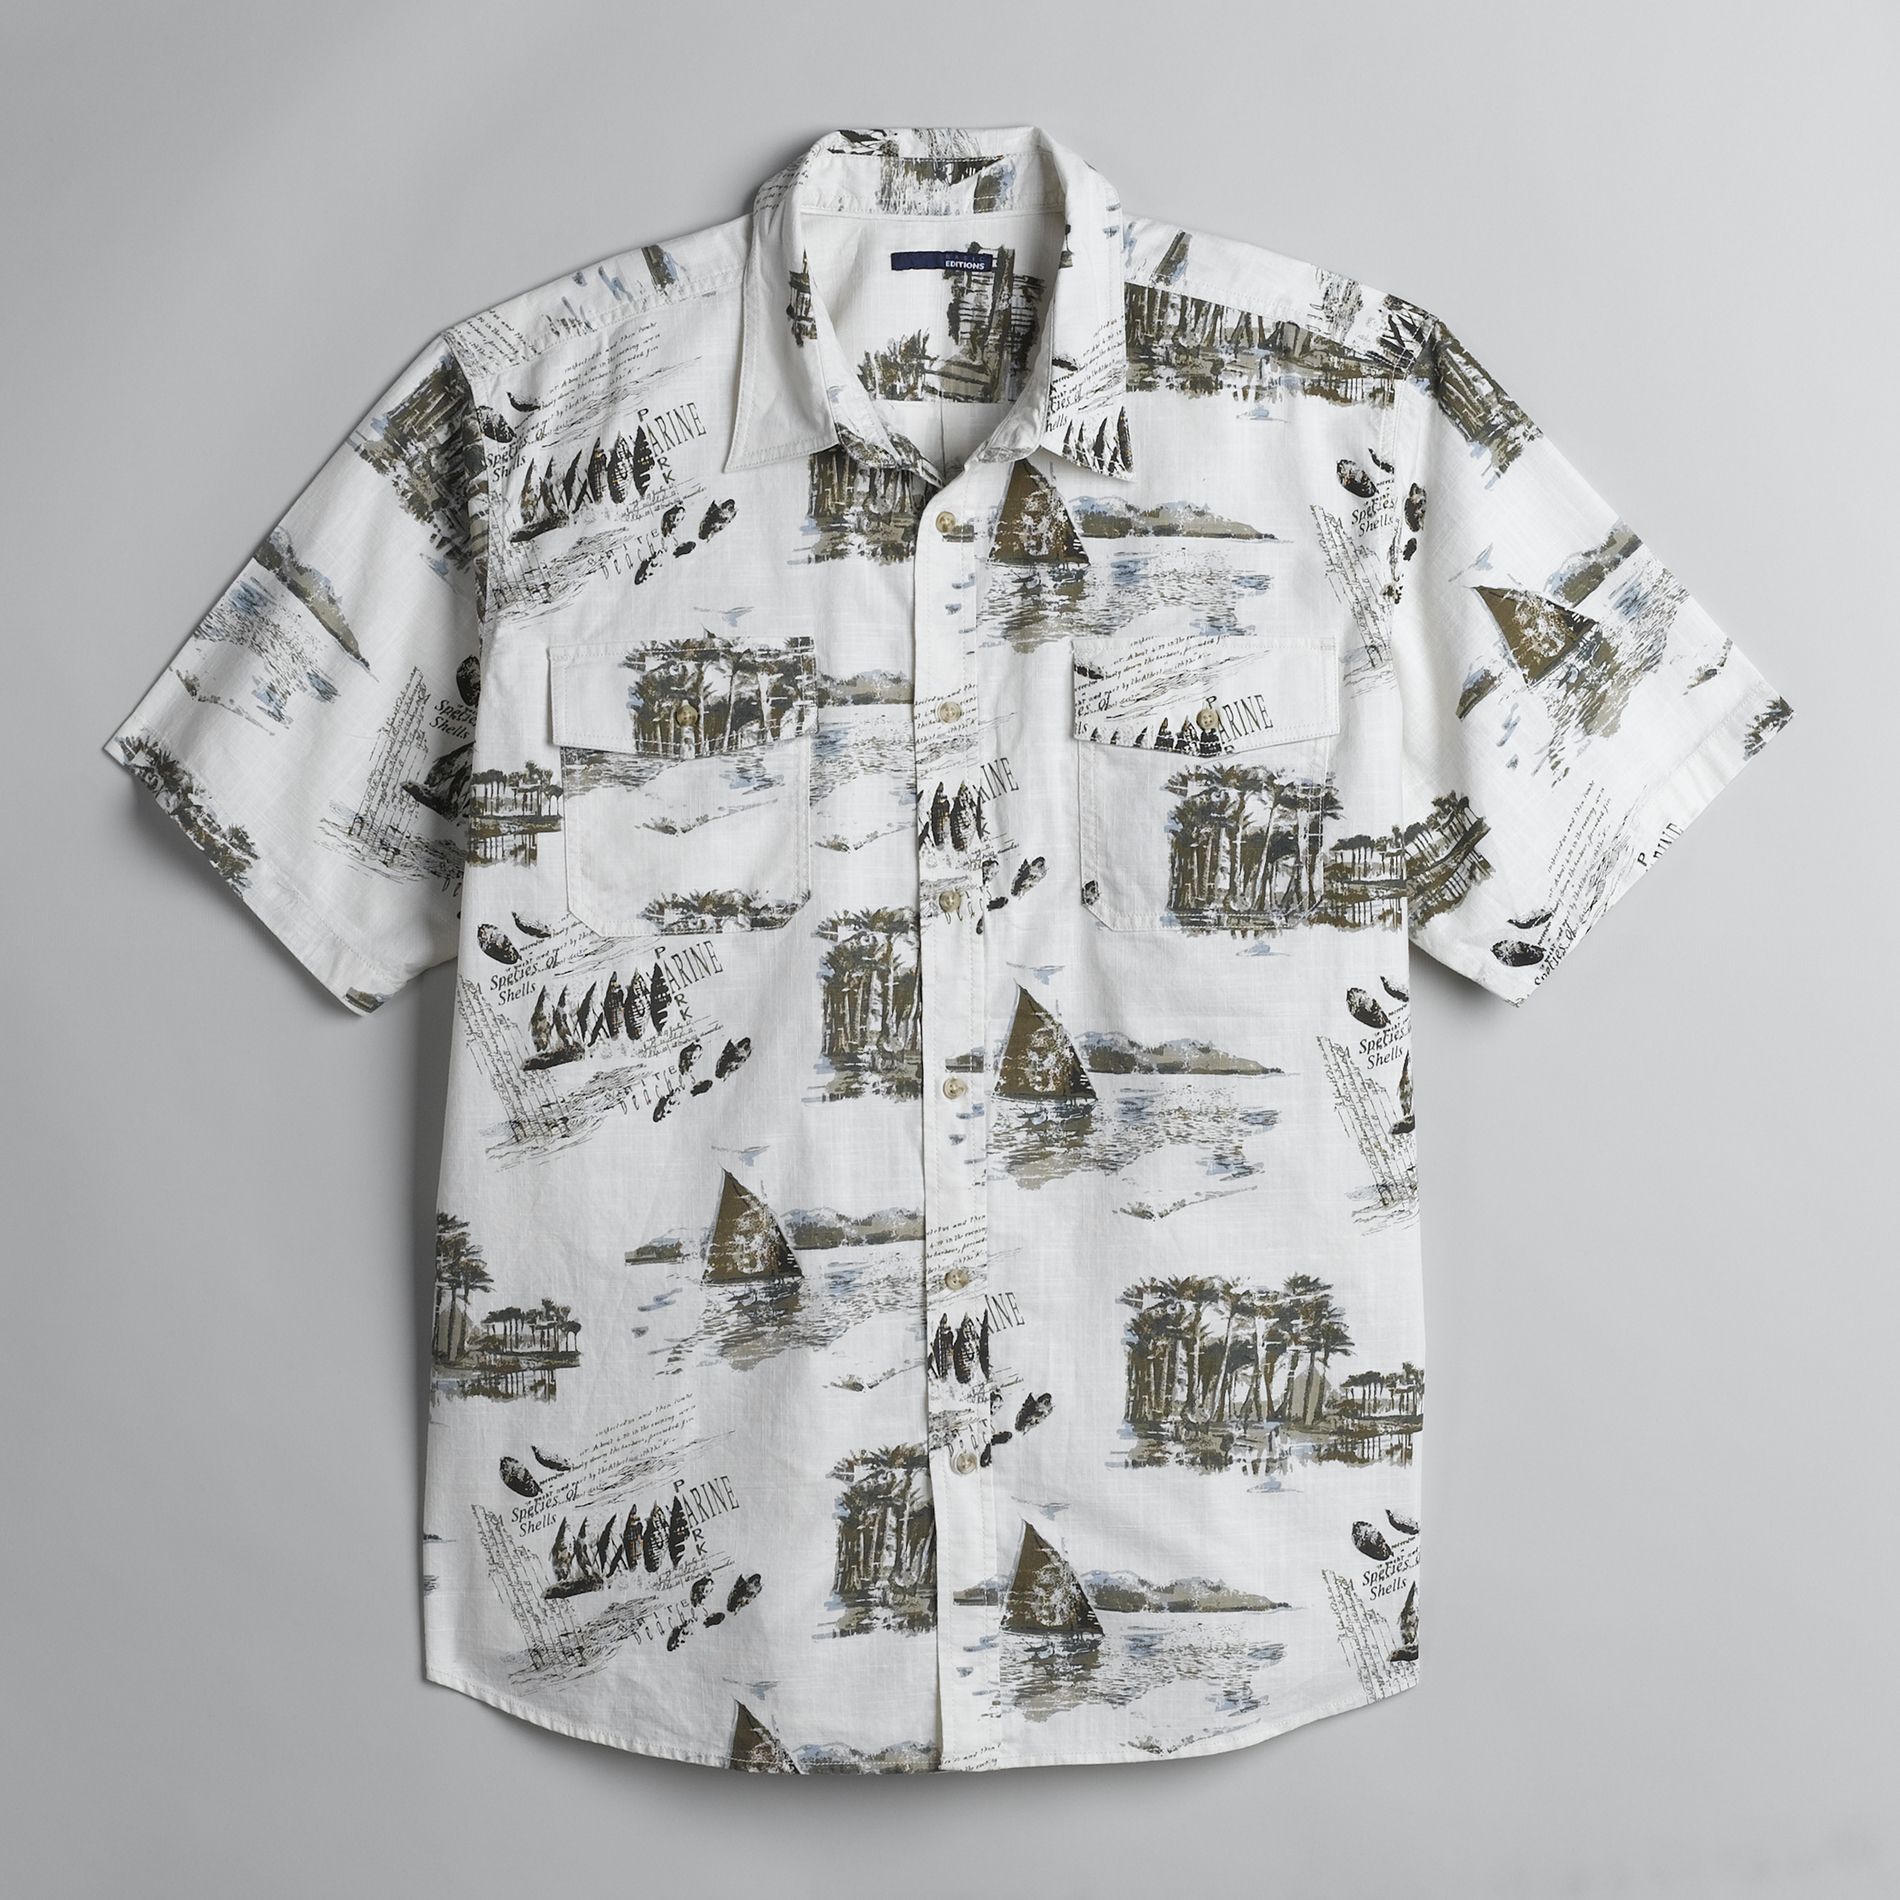 Basic Editions Men's Short Sleeve Ocean Print Shirt